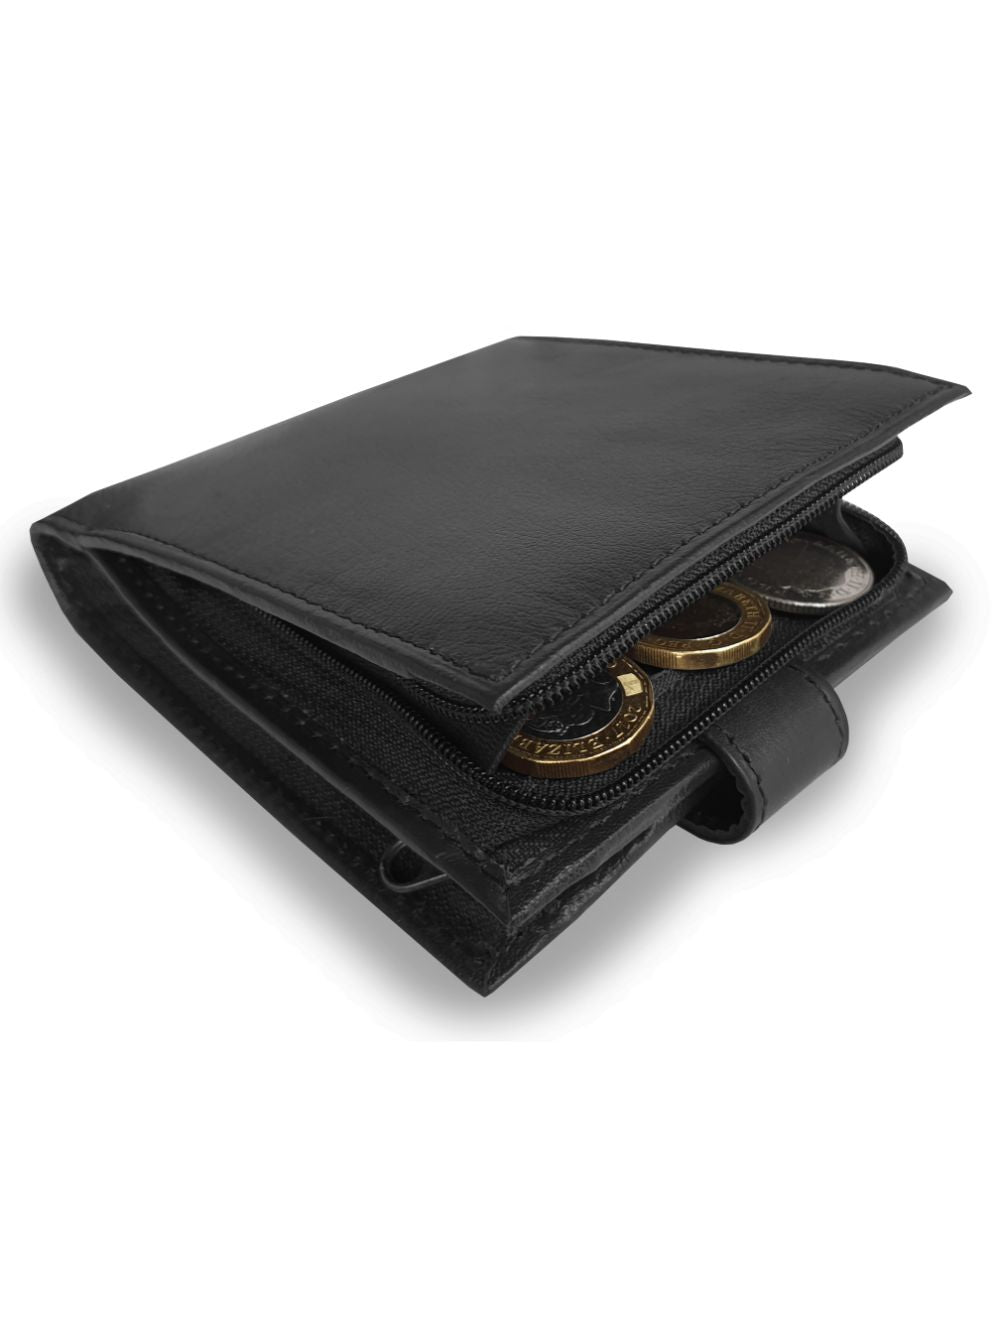 Roamlite Mens wallet black leather rl180 open